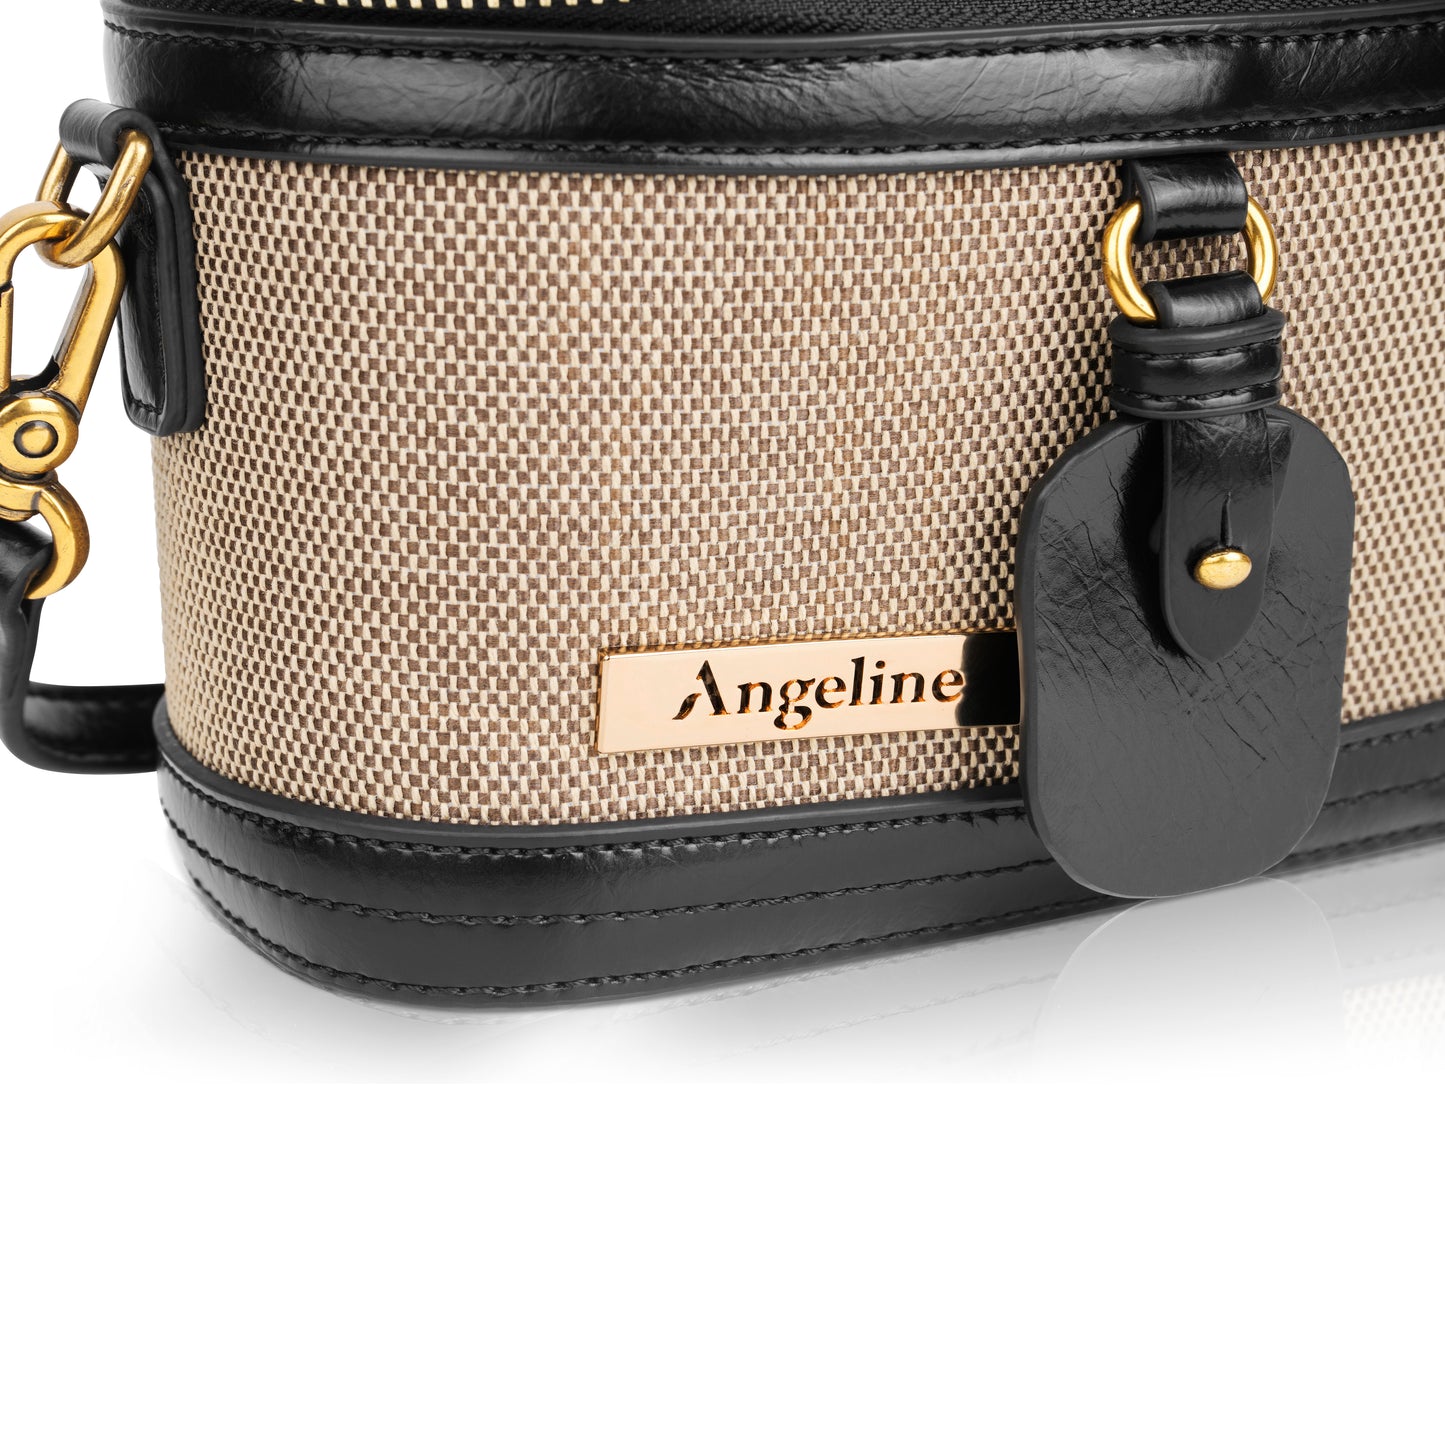 Angeline's Royal Look Women and Girl Sling Bag